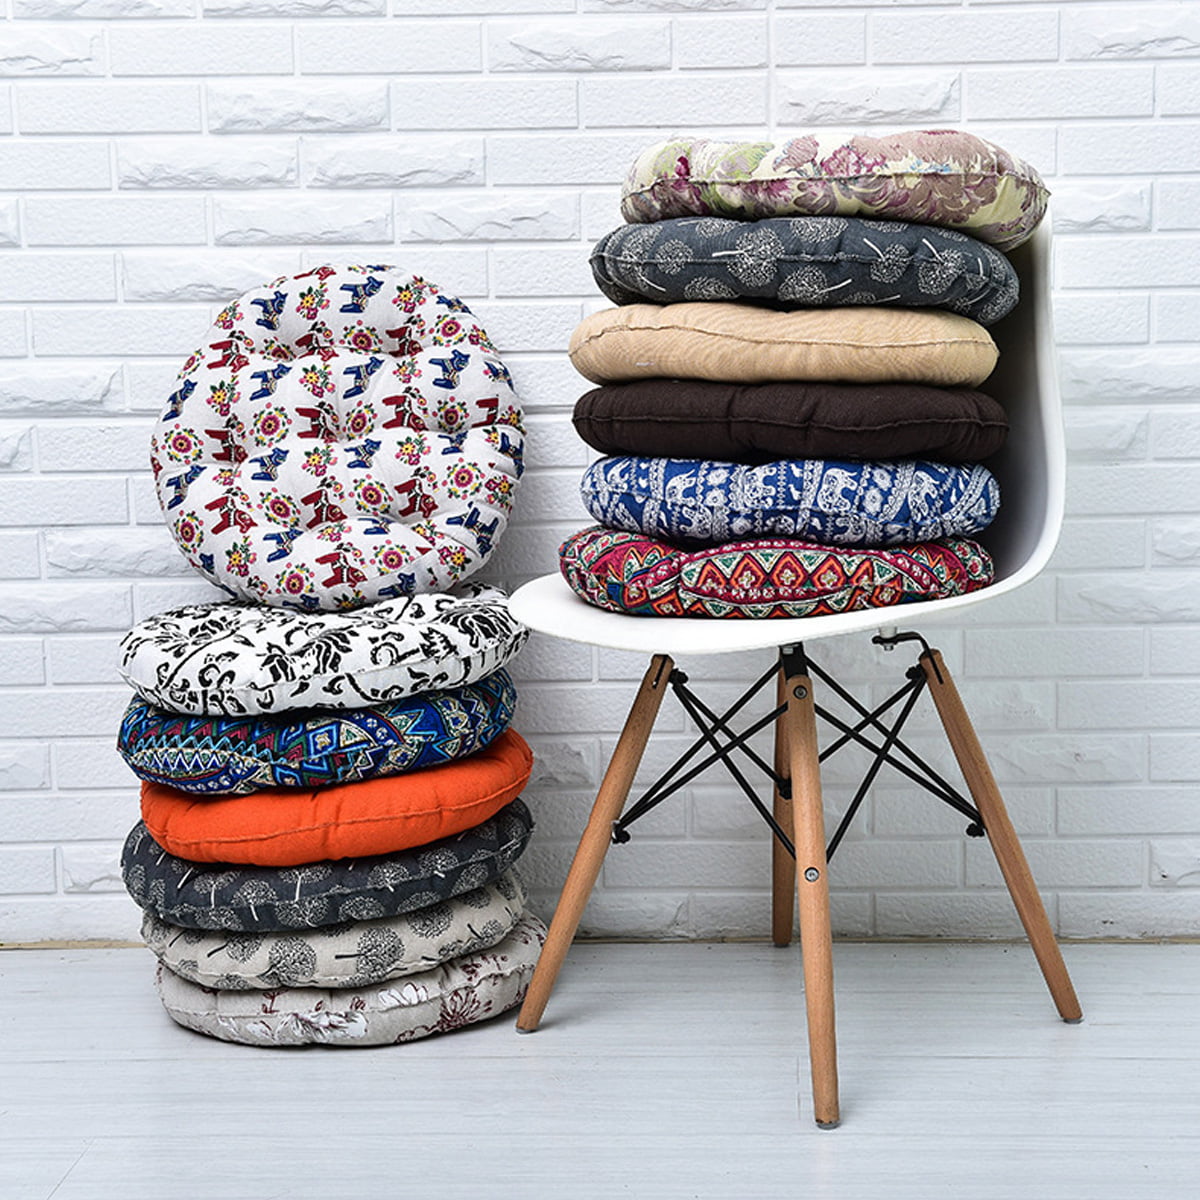 43x43cm Round Cotton Linen Chair Cushion Pillow Seat